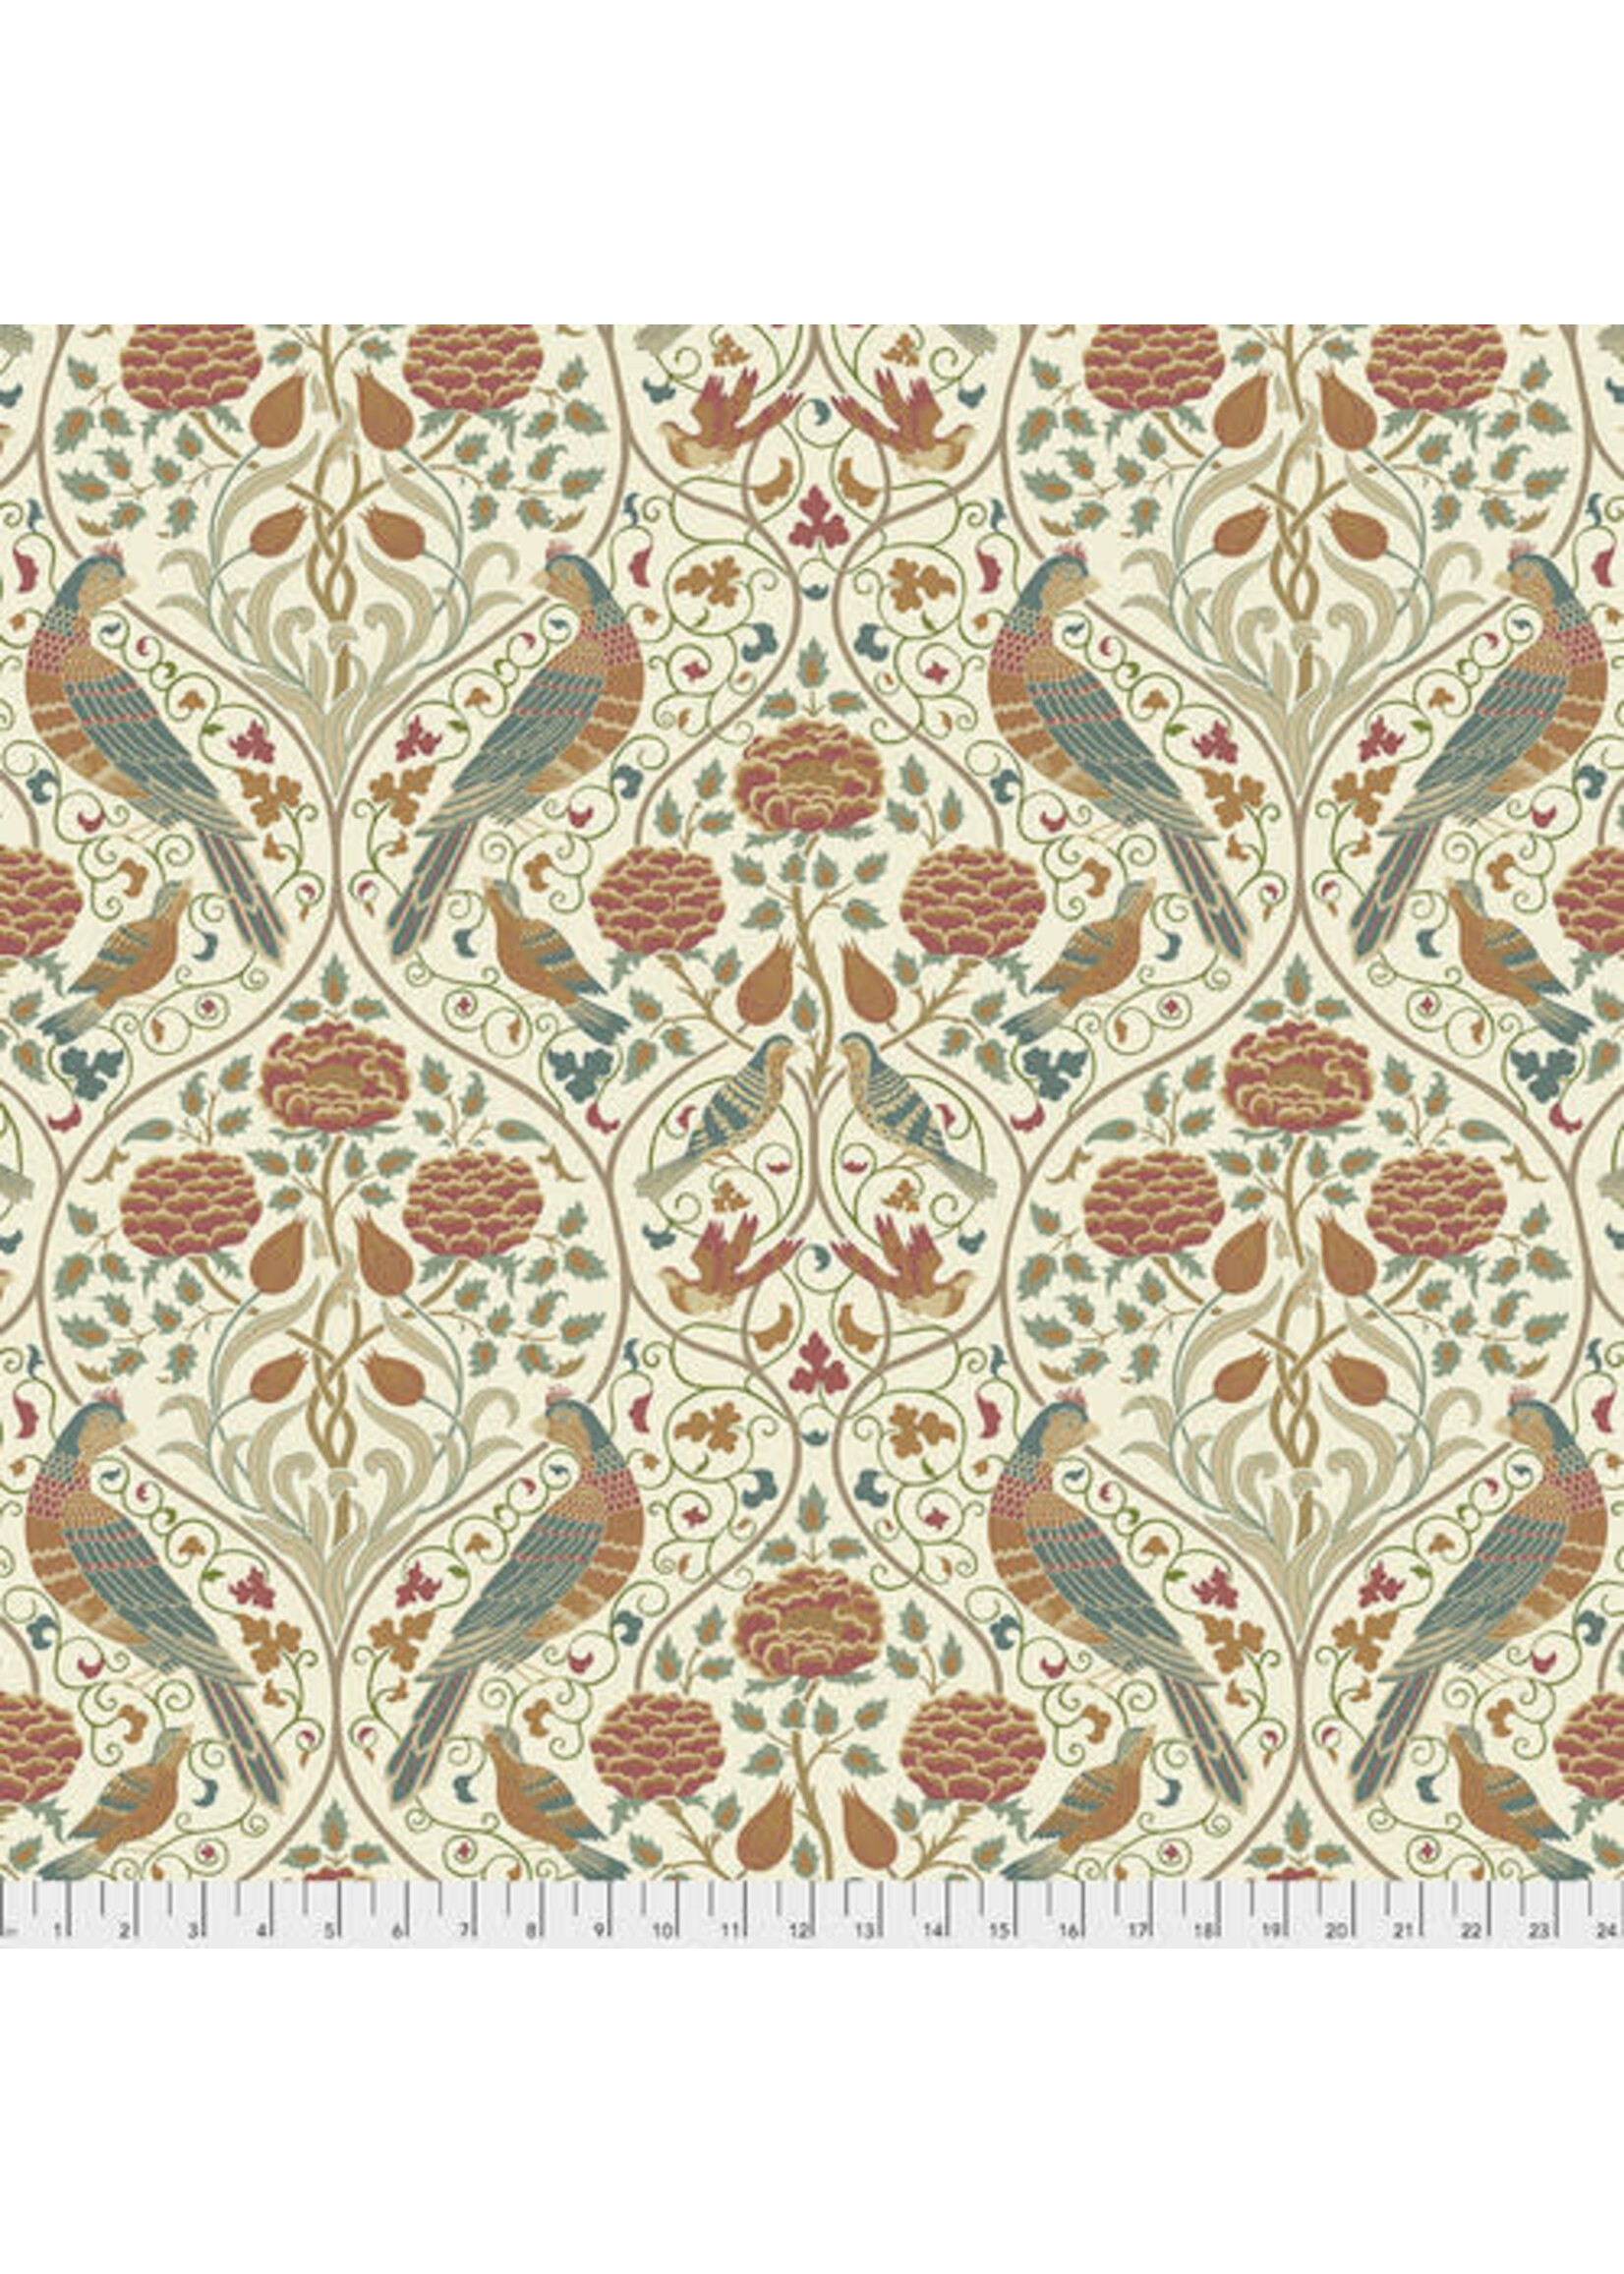 Free Spirit Fabrics The Original Morris - Seasons by May Large - Linen - 045